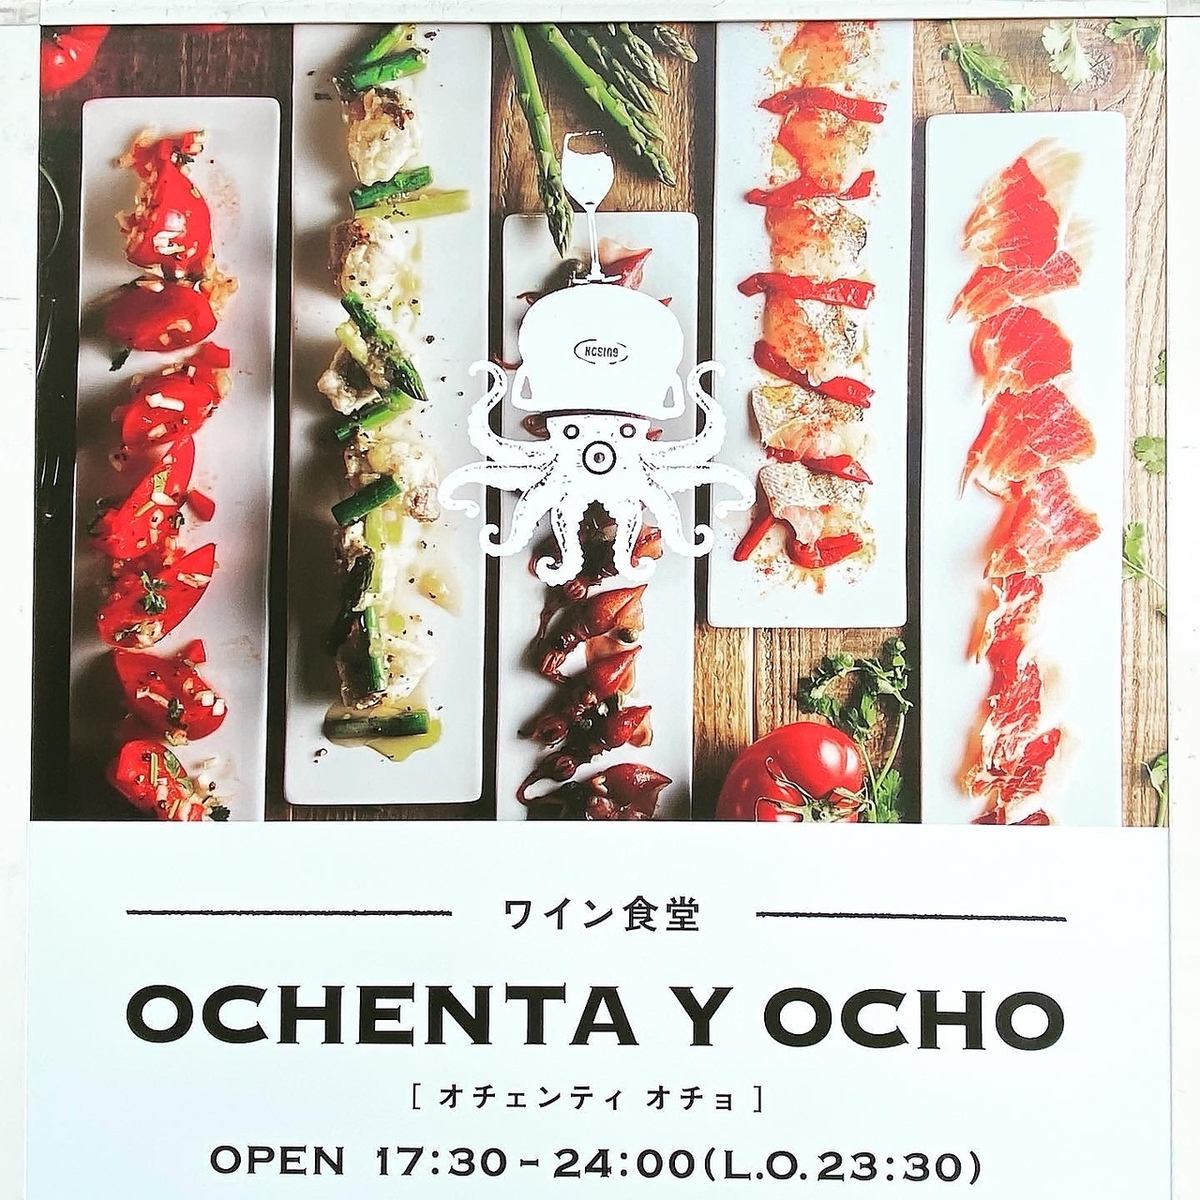 Ochentiocho, a wine restaurant where you can enjoy traditional Spanish cuisine